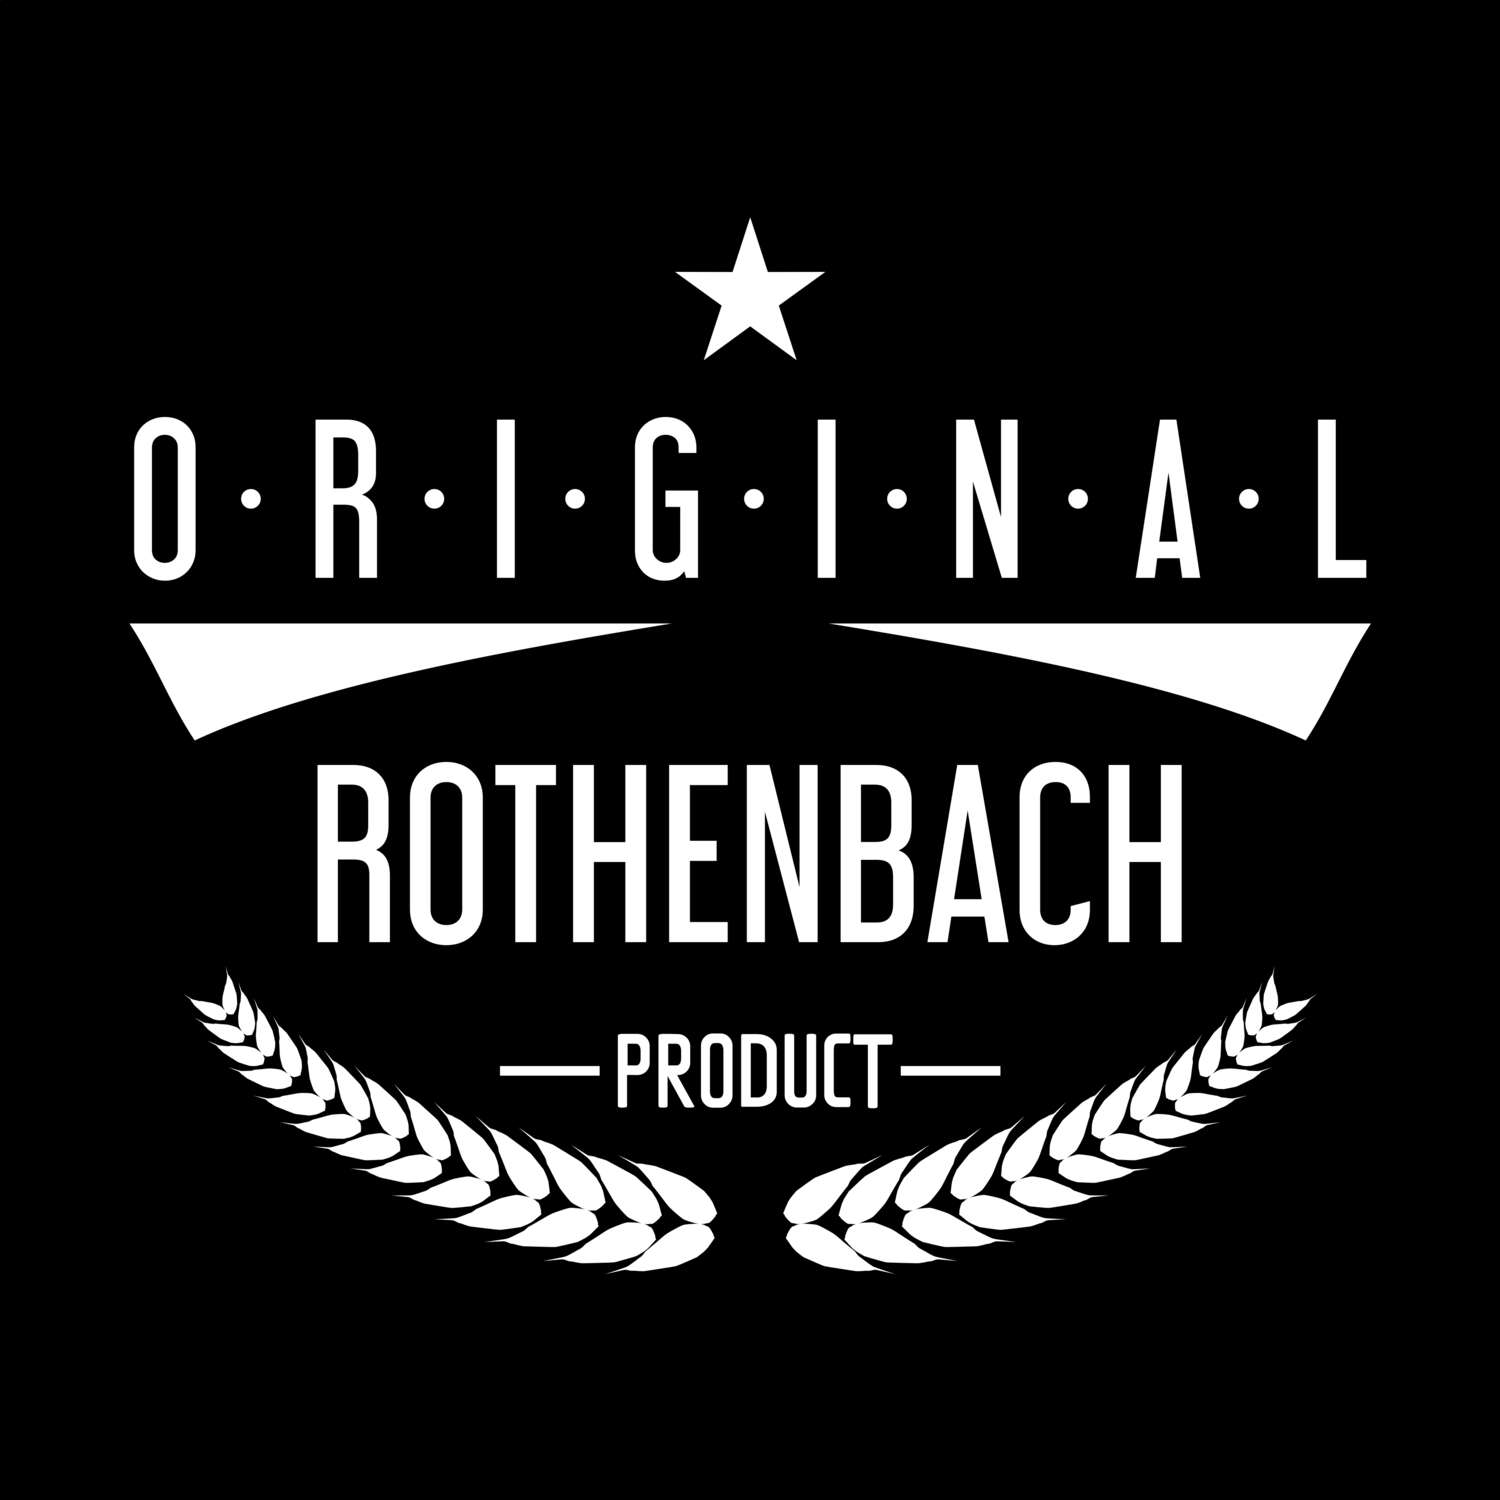 Rothenbach T-Shirt »Original Product«